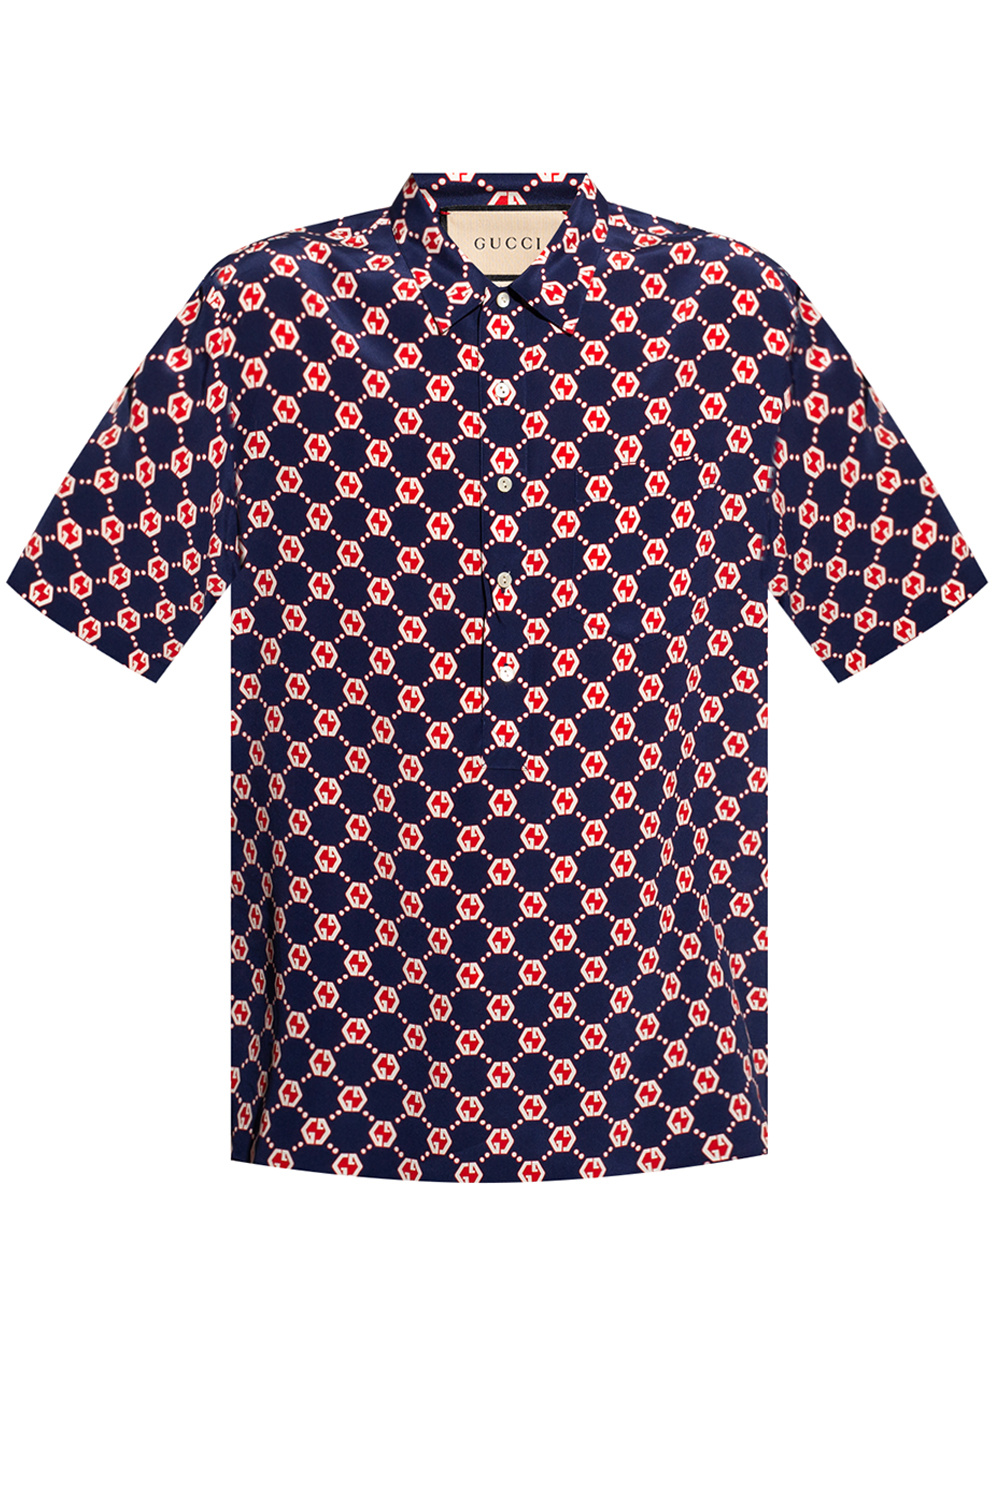 Gucci Silk shirt with logo | Men's Clothing | Vitkac